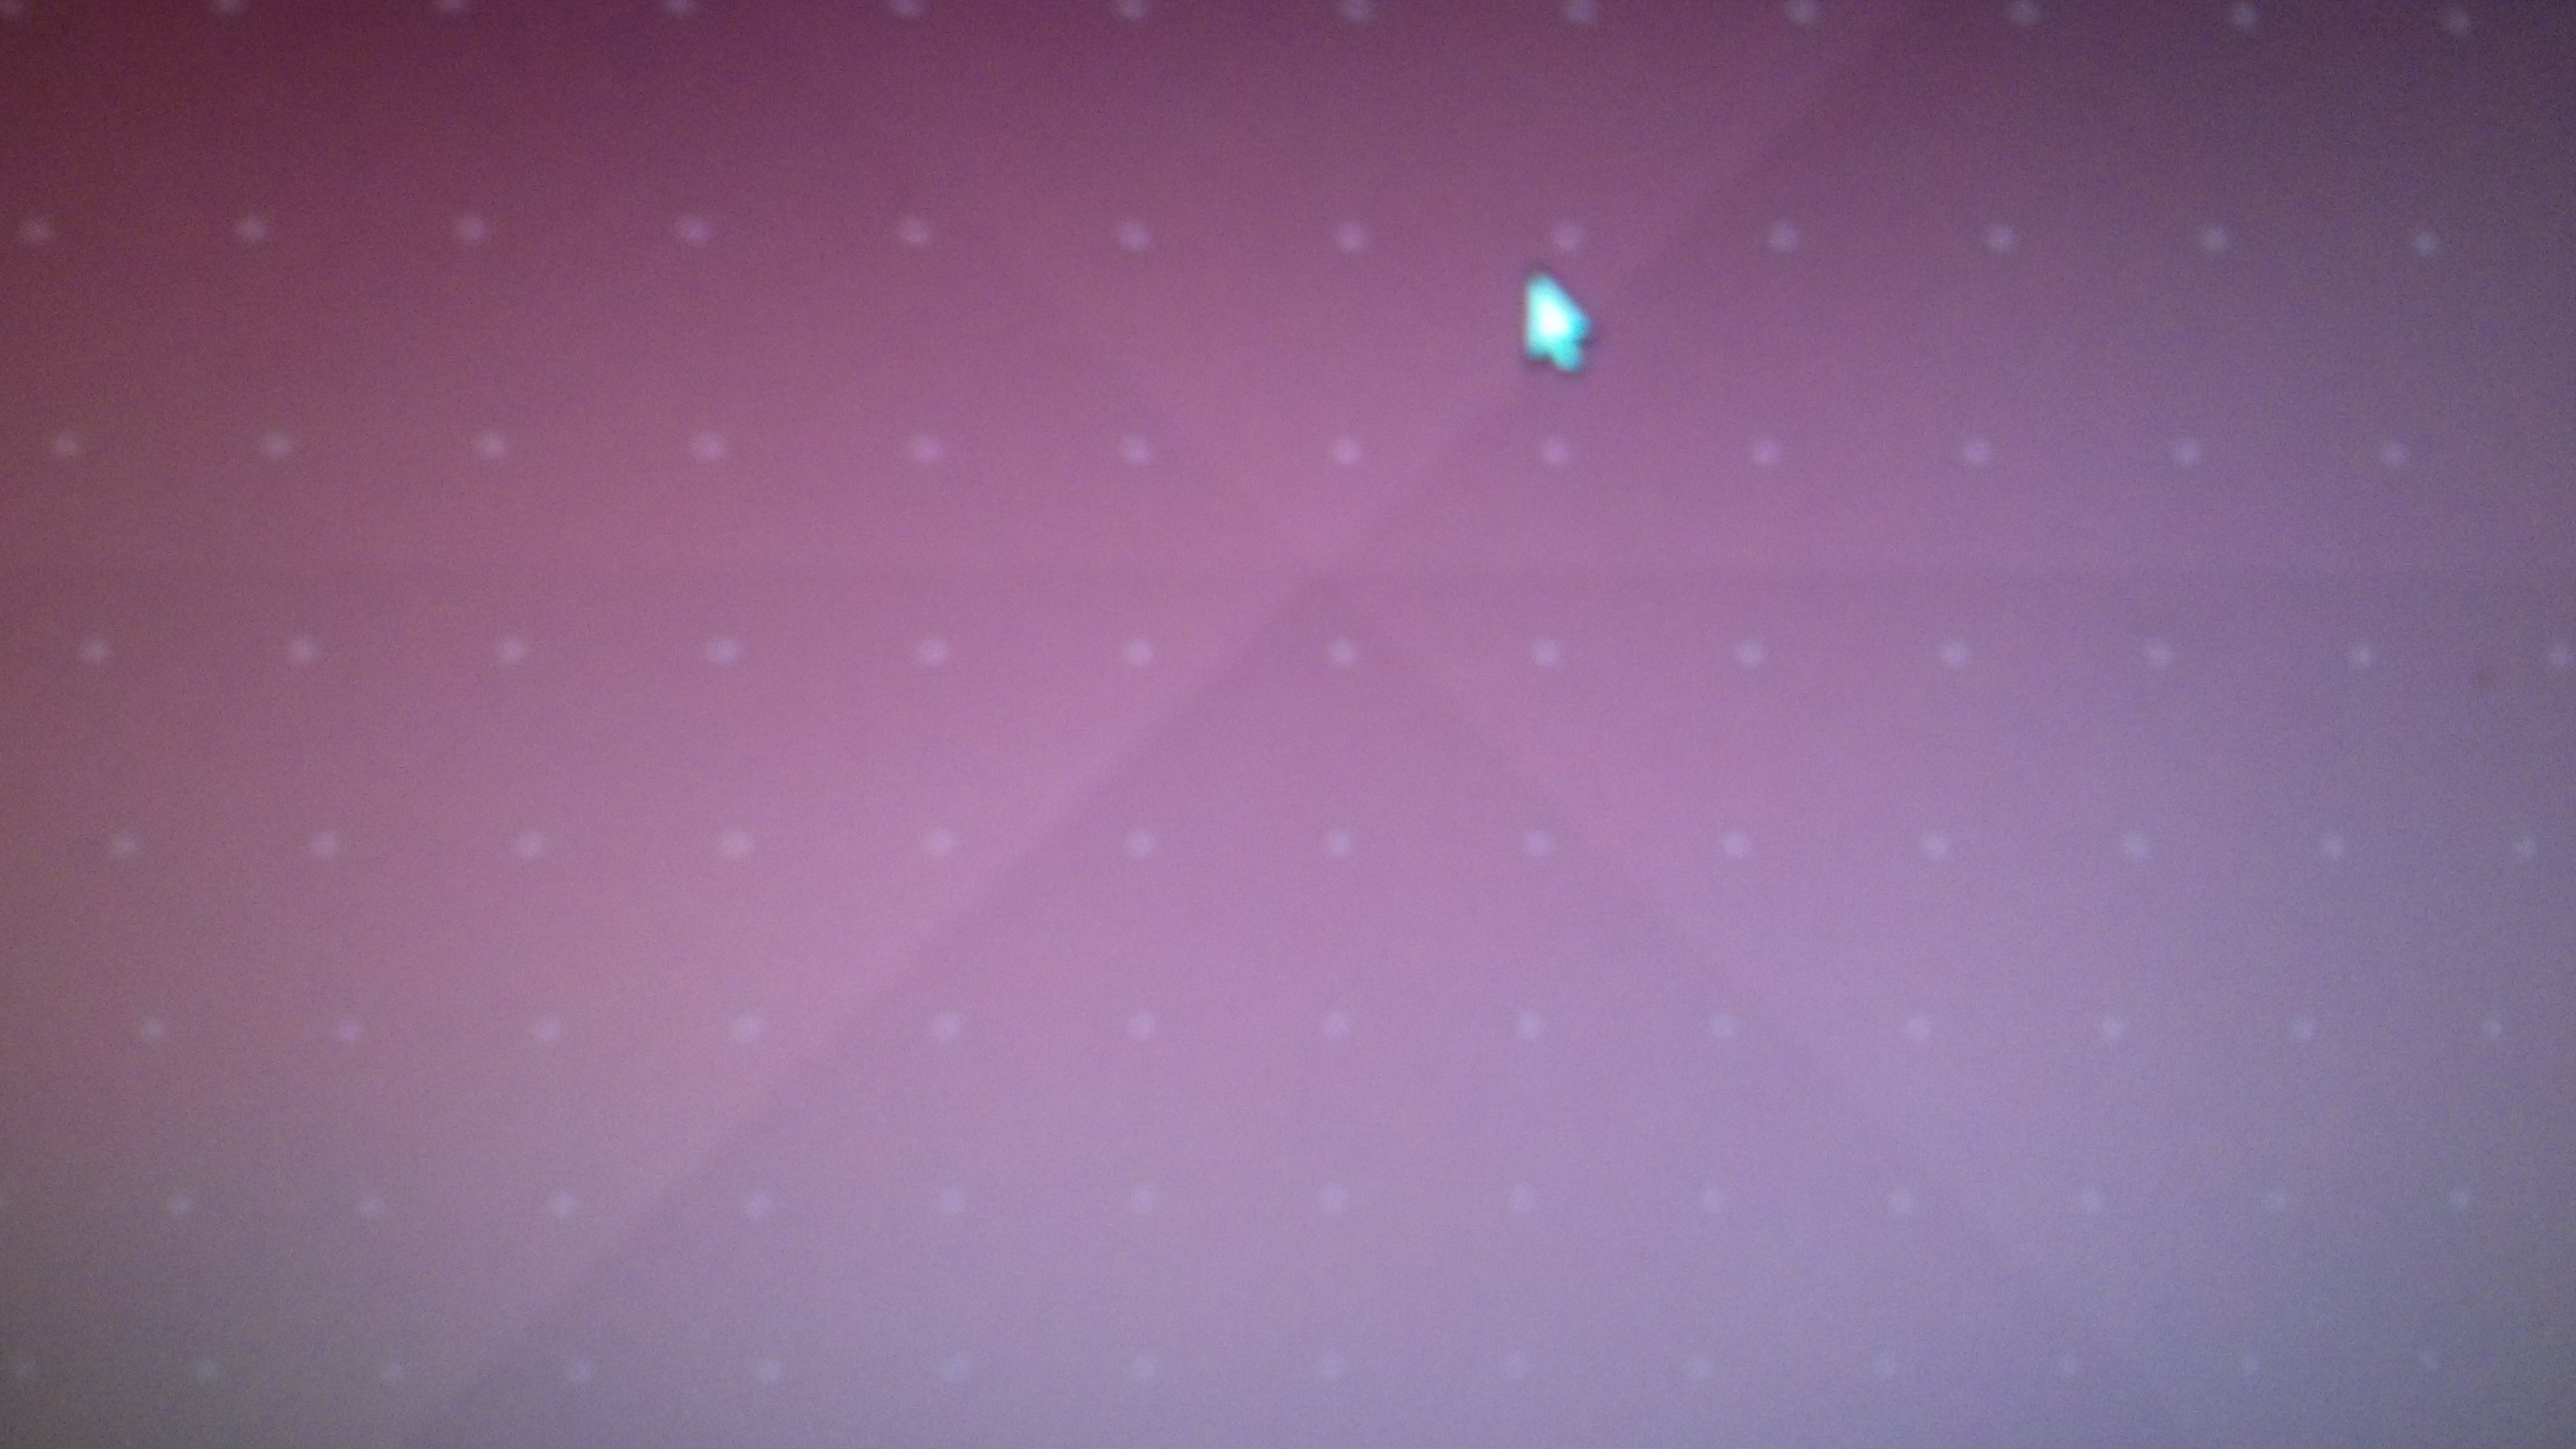 New Ubuntu Lts Suru Wallpaper Gets A Fix For Proportion Issue